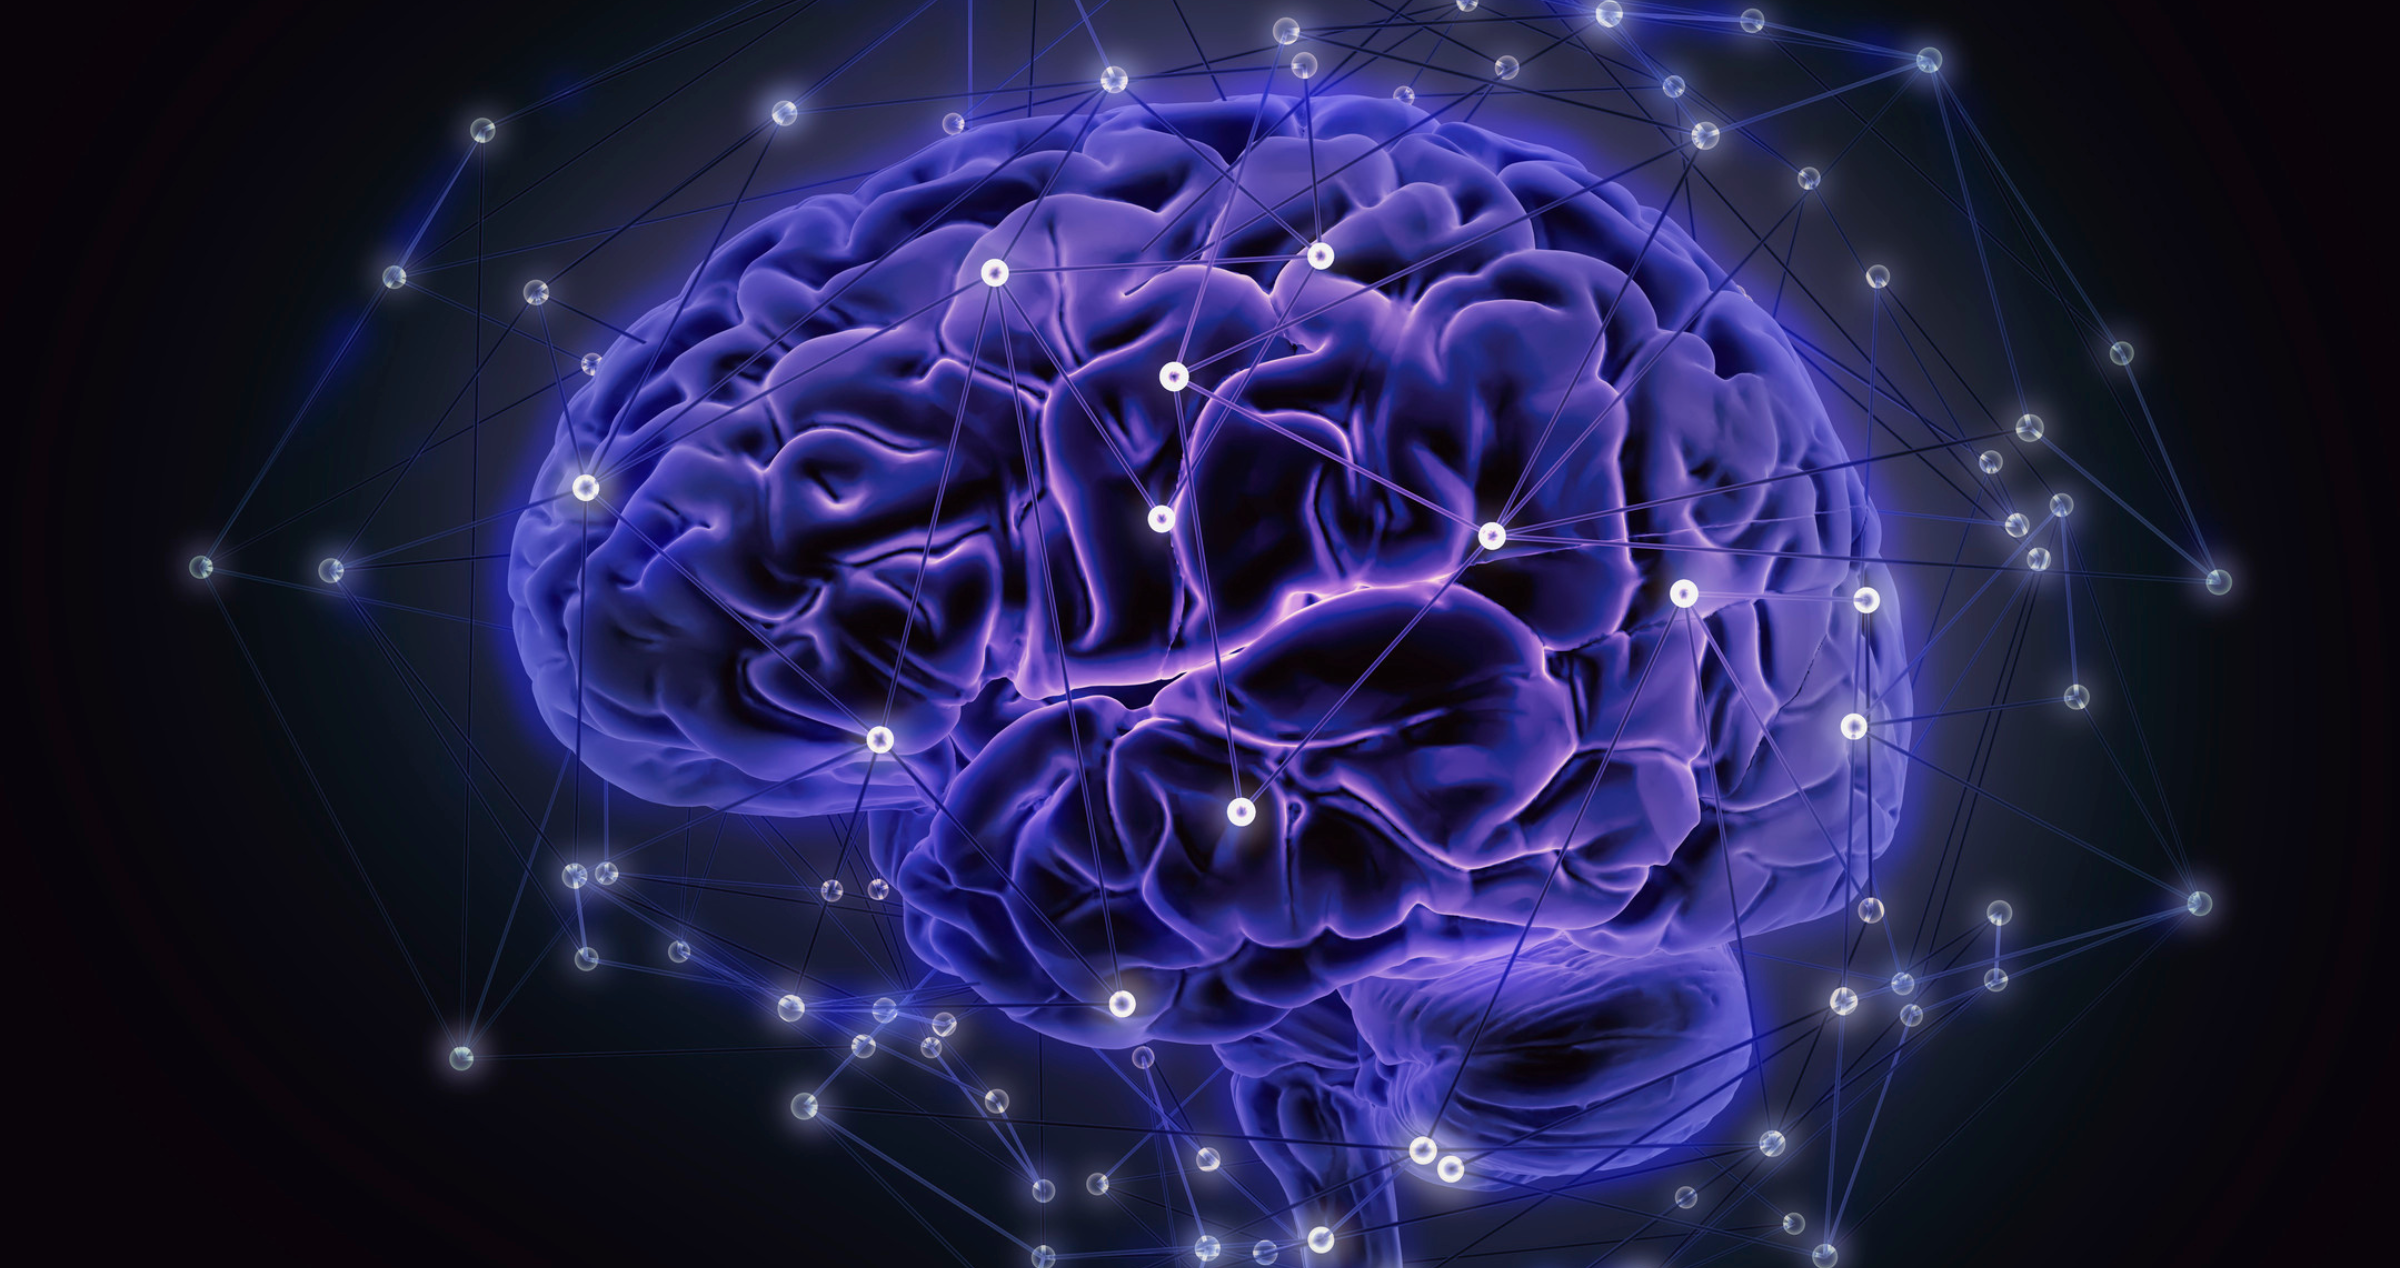 Image of an animated purple brain